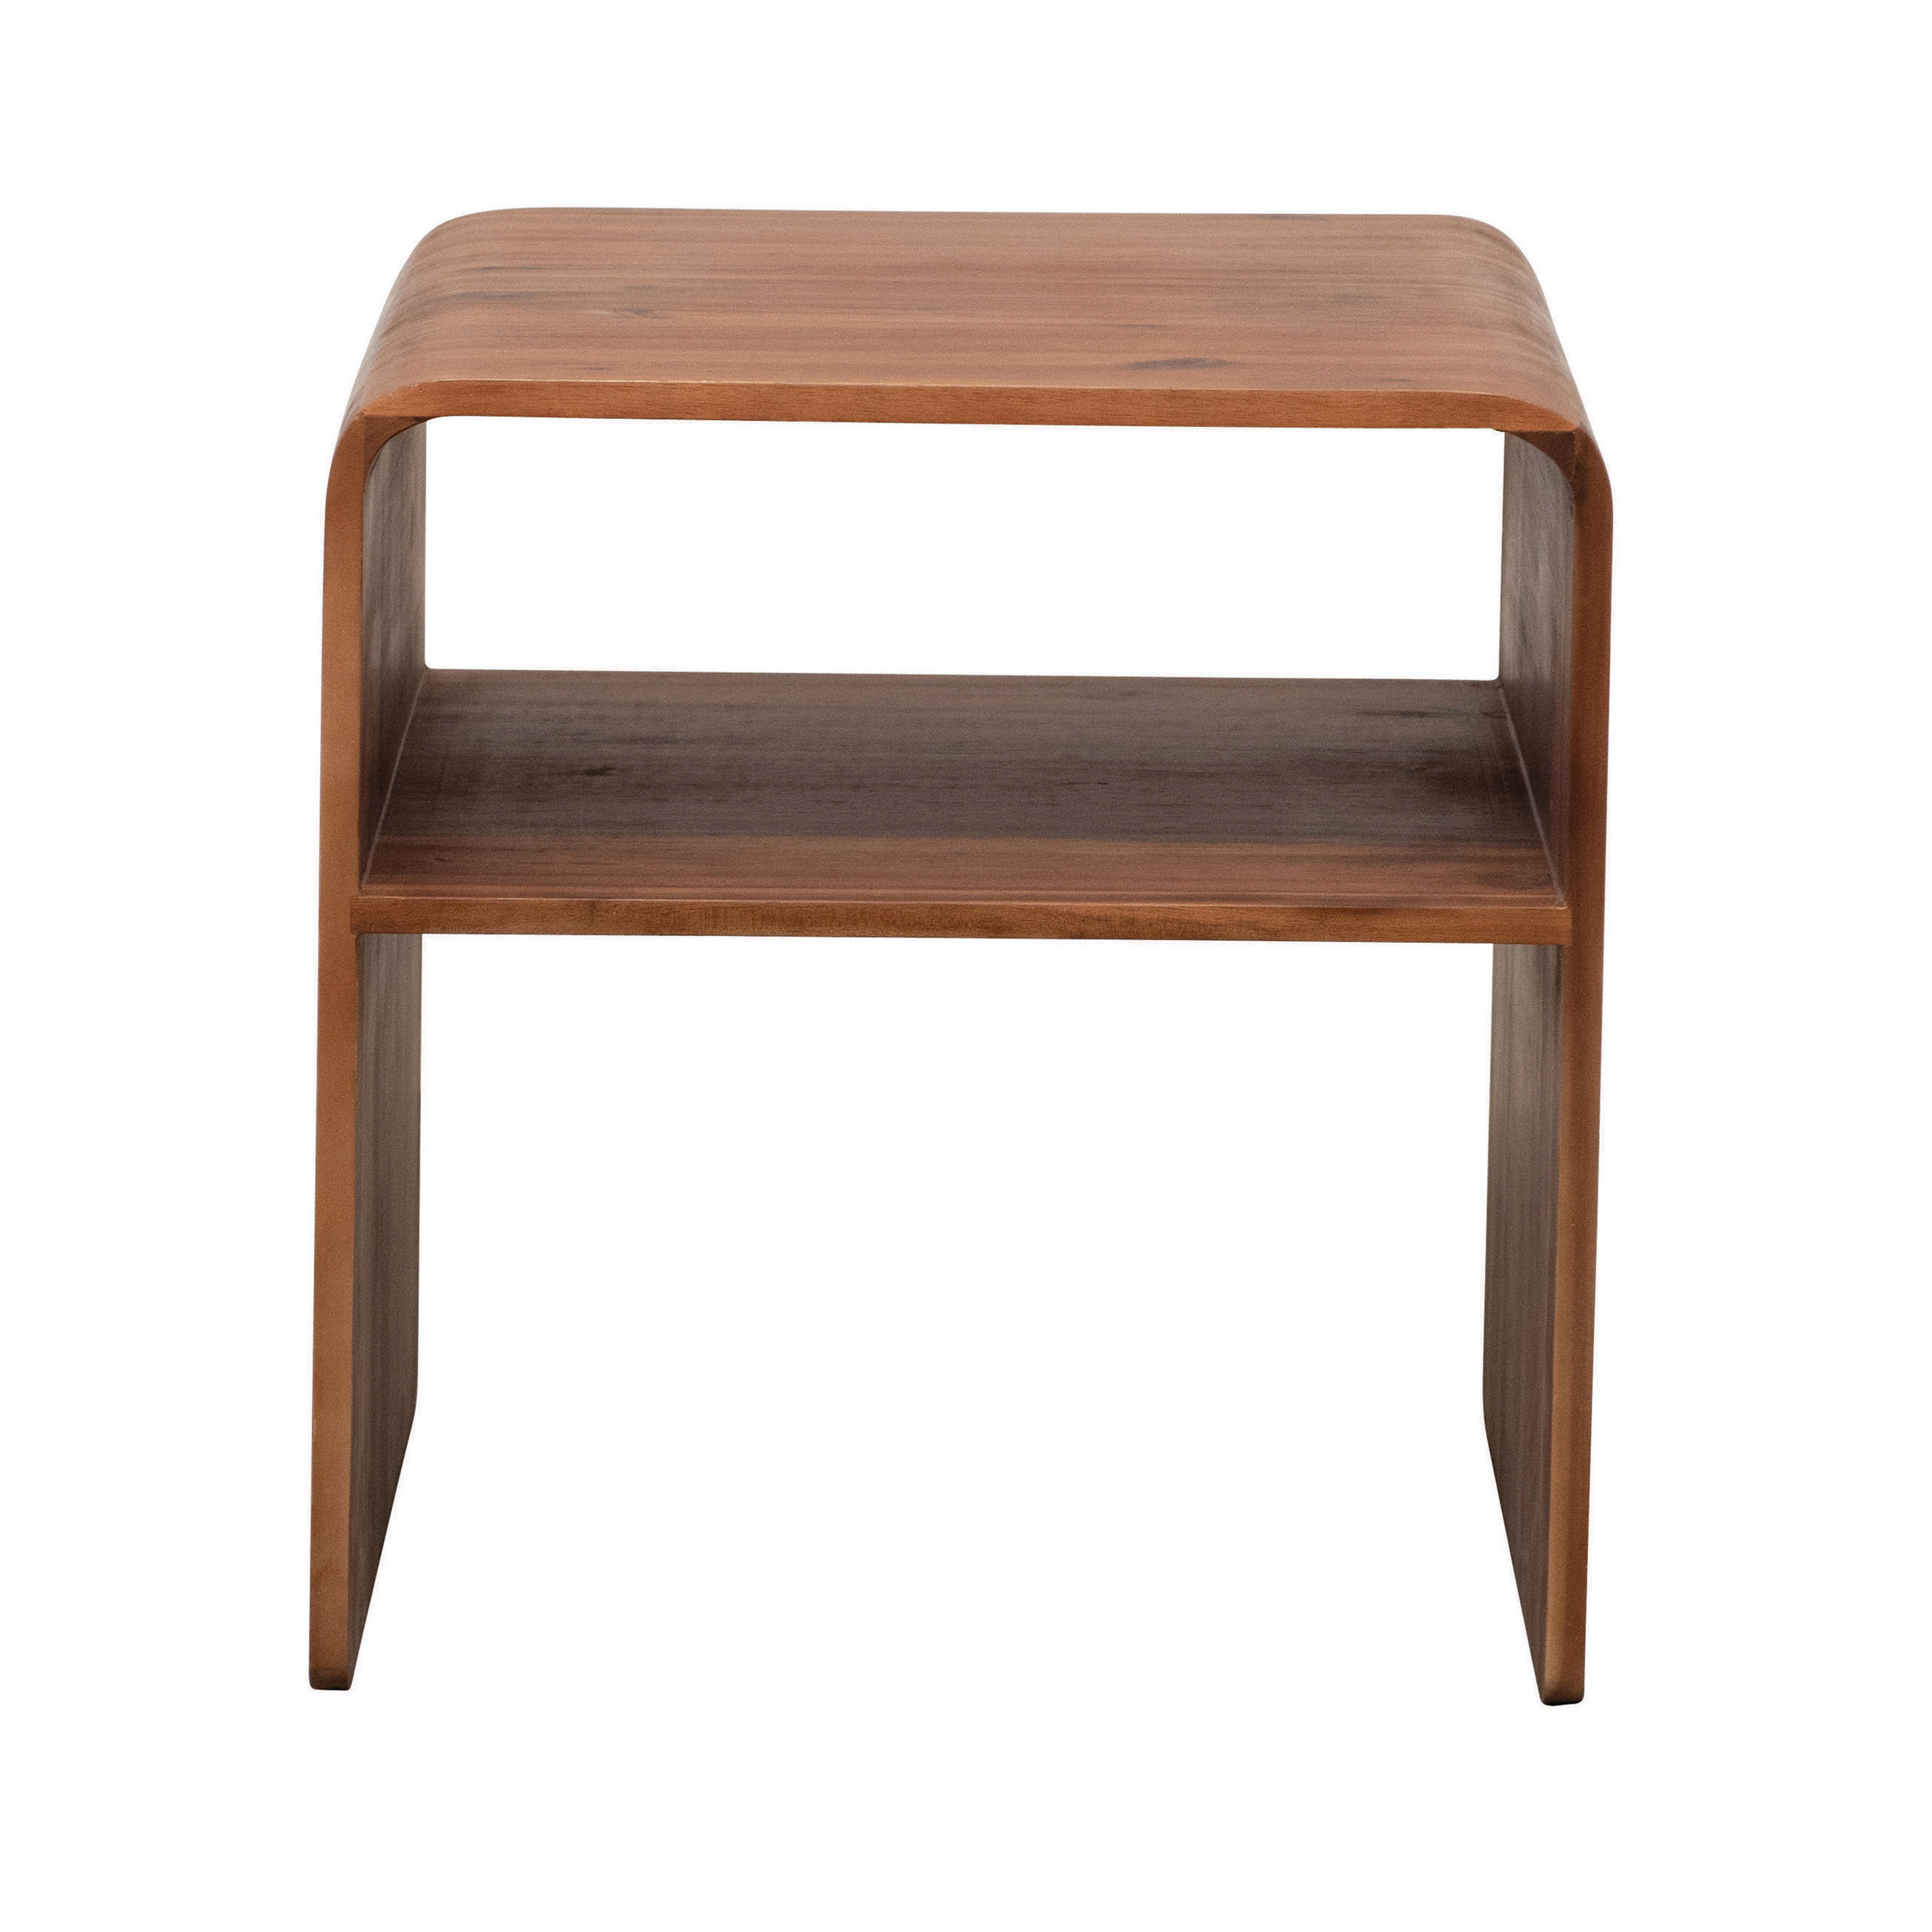 Acacia Wood Table with Shelf - Image 0